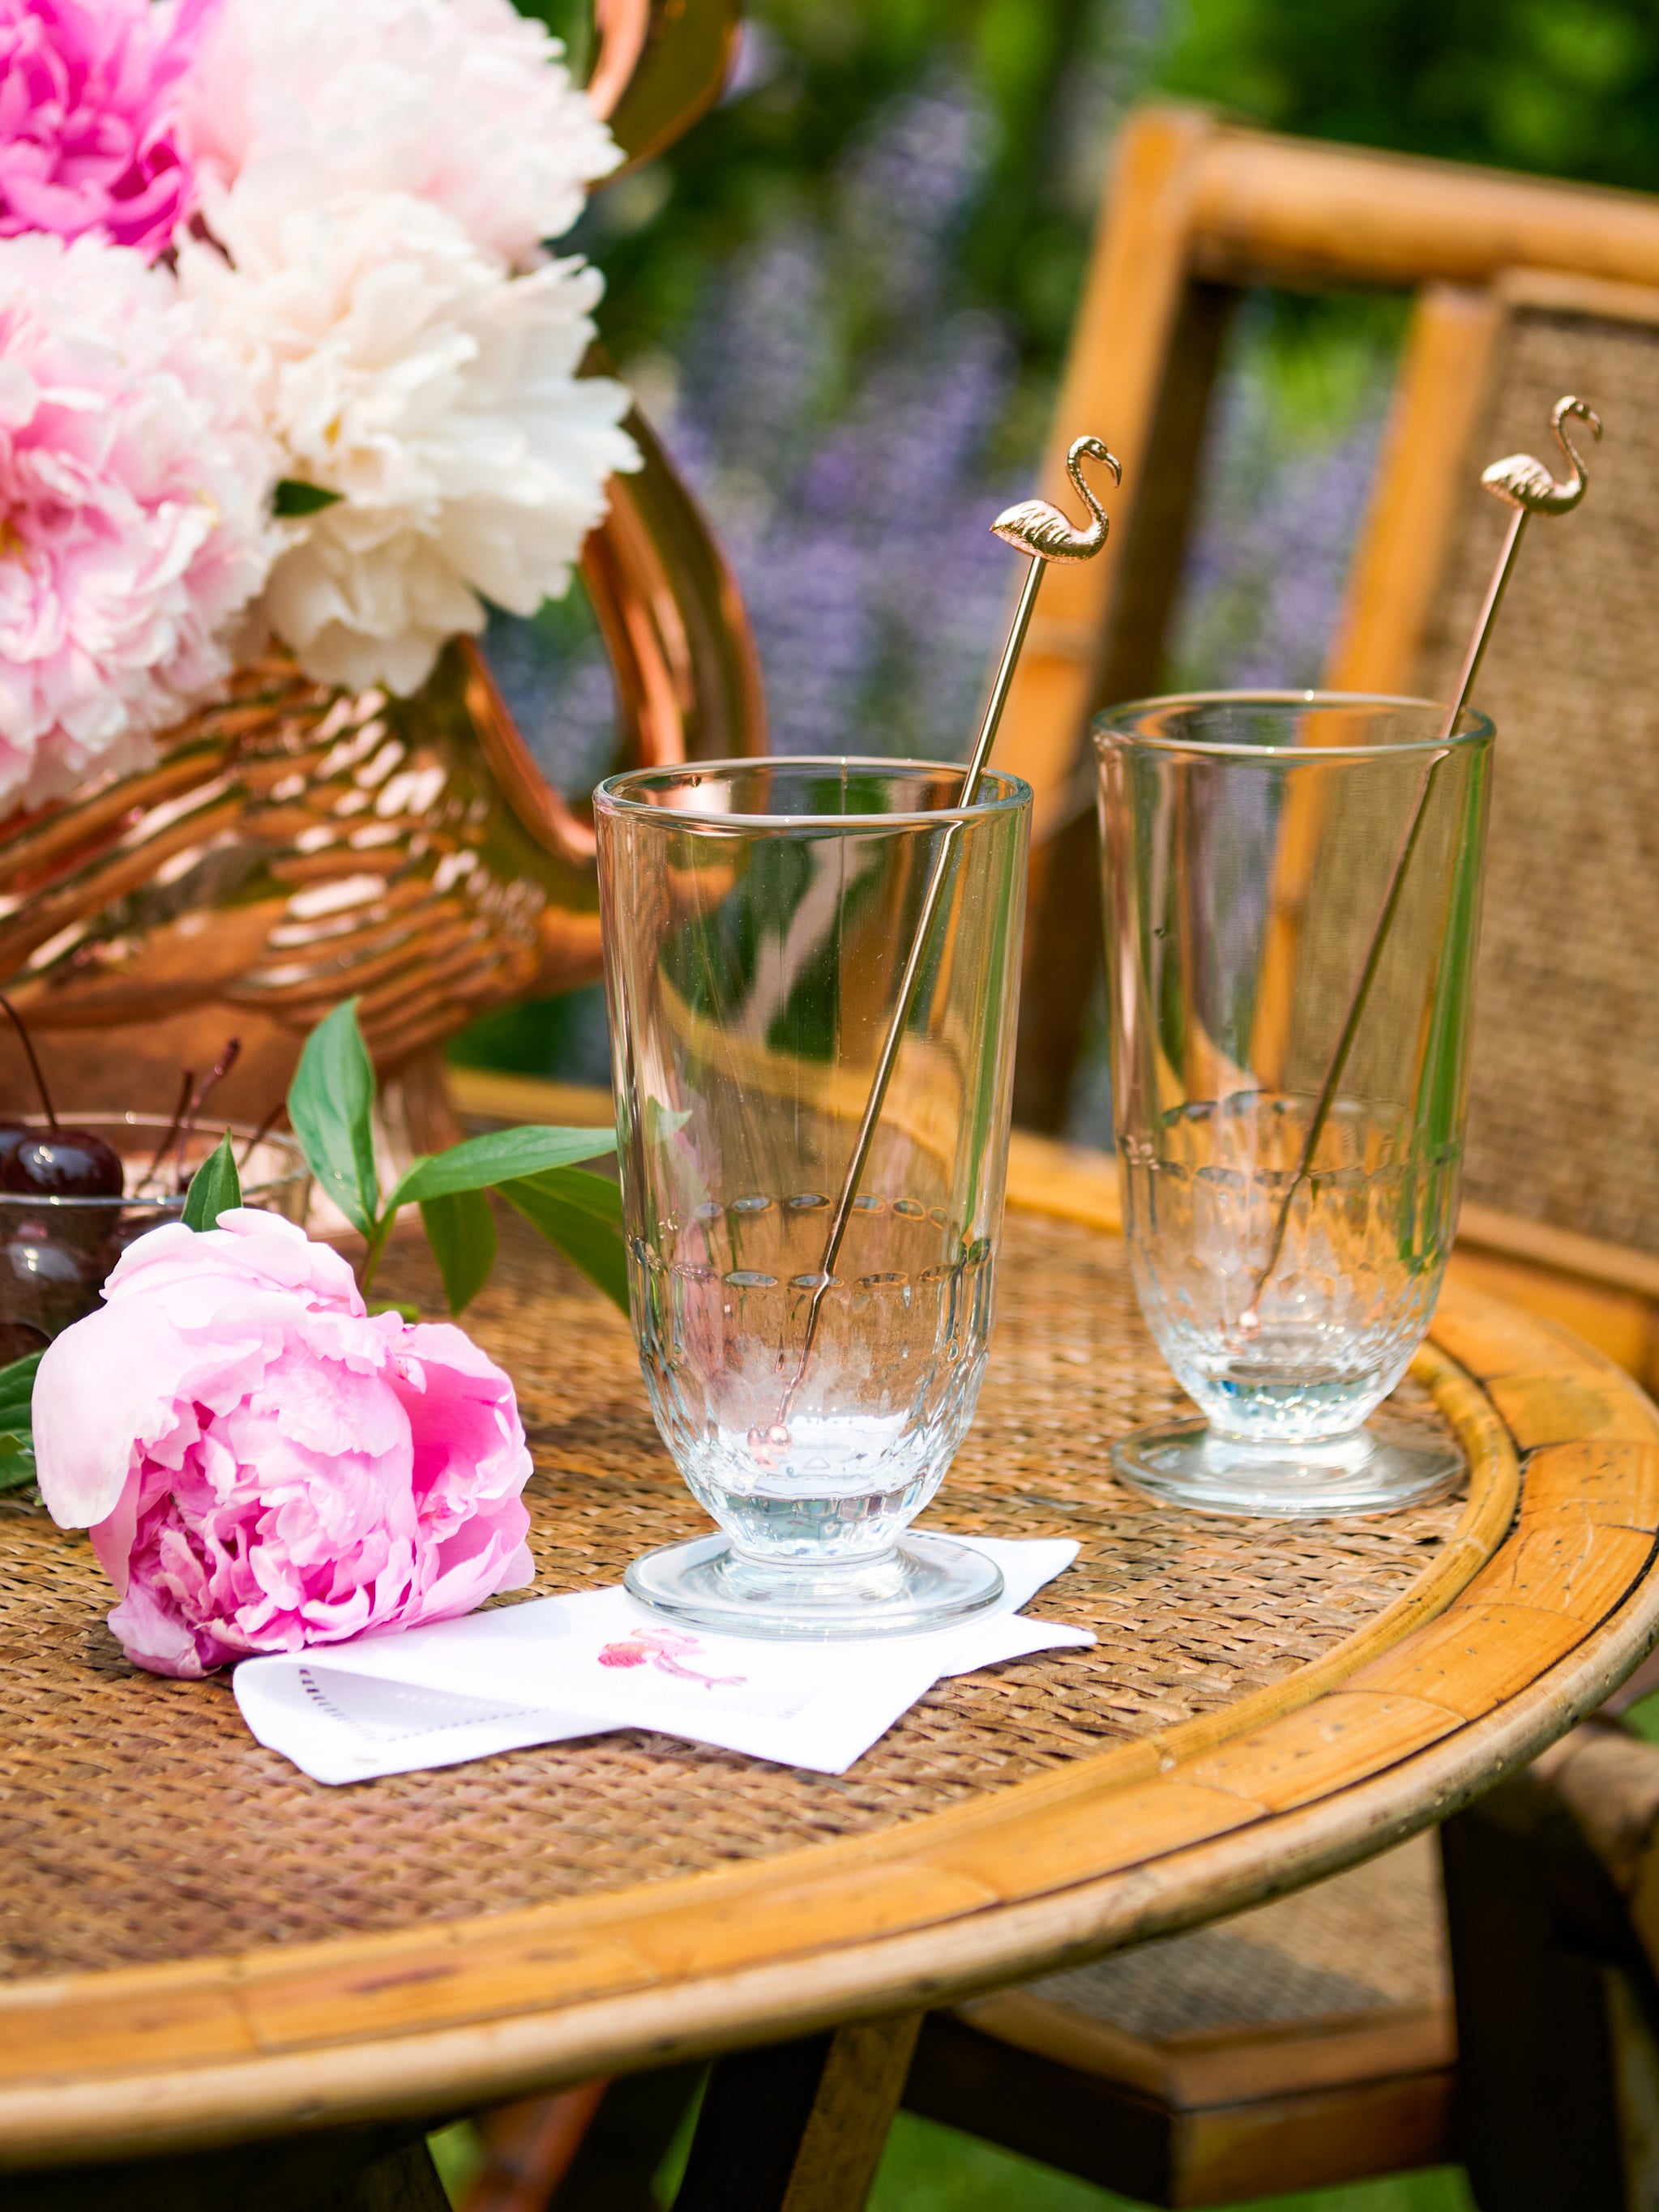 La Rochere Artois 6-Piece Ice Tea Glass Set - Clear